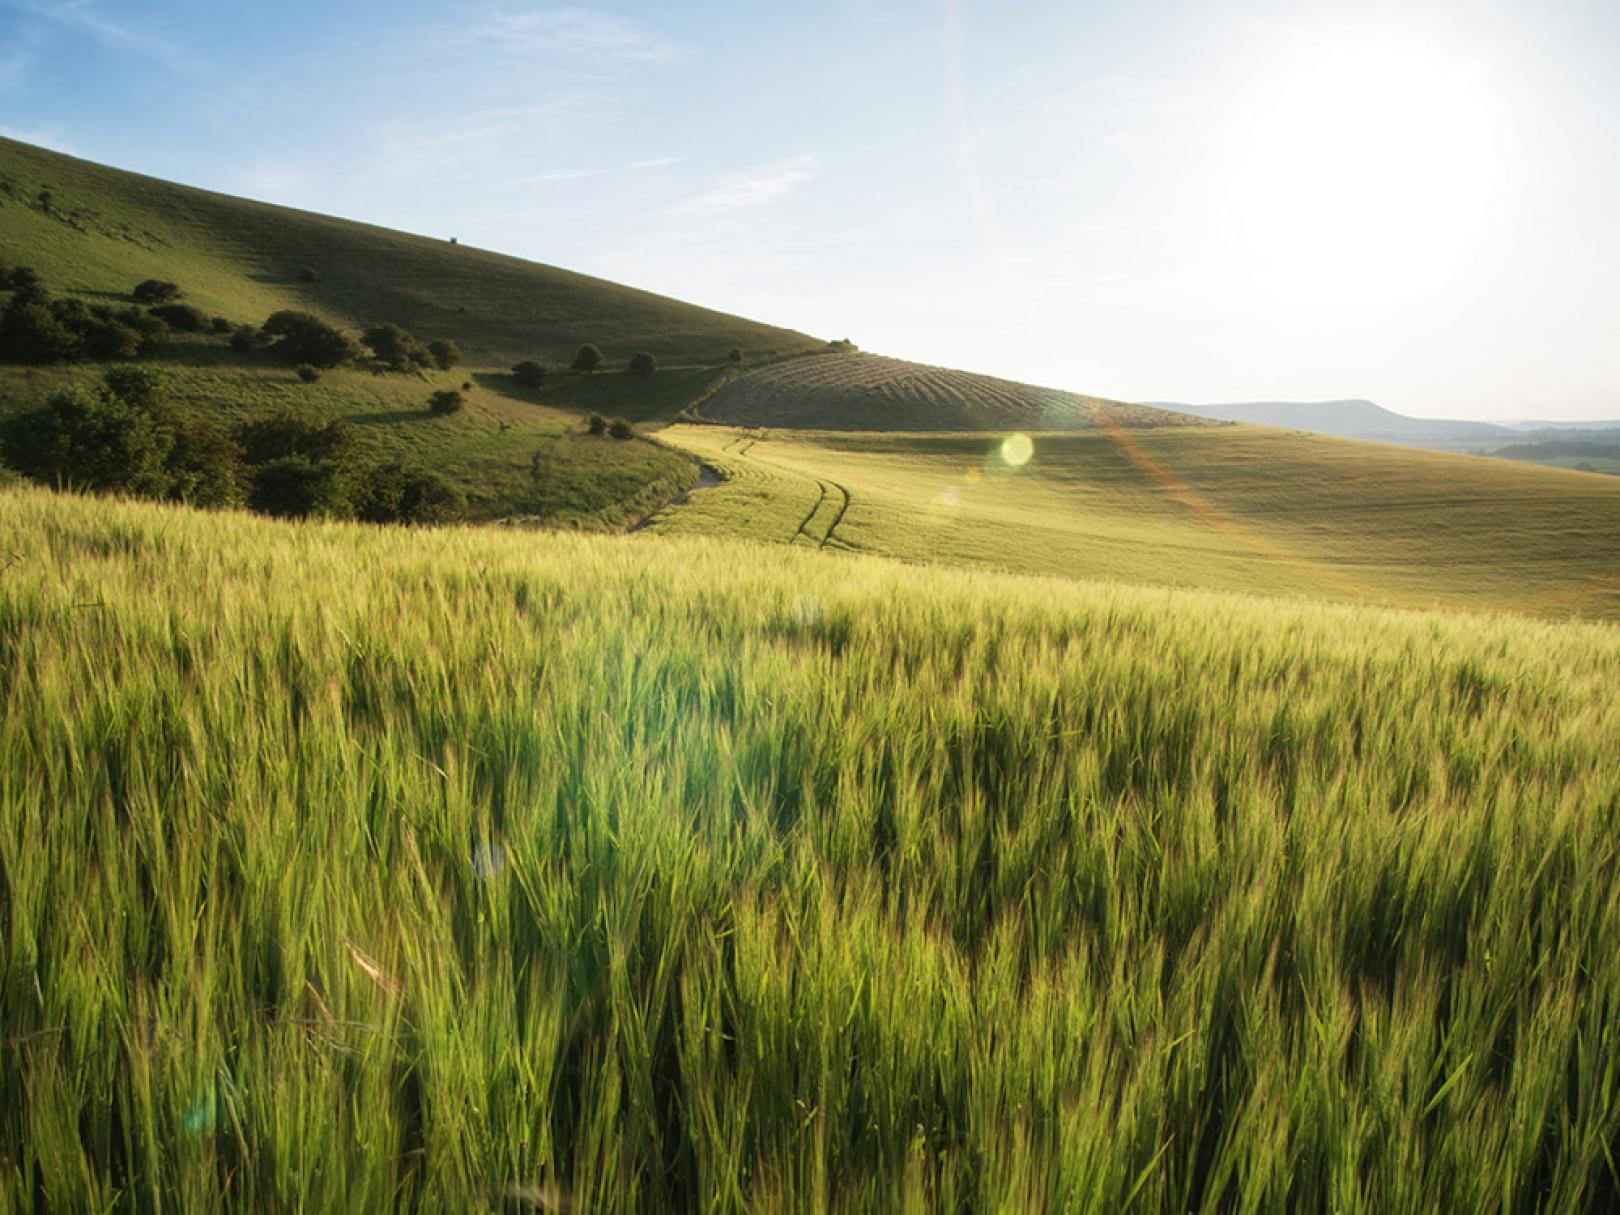 Image of Beautiful Landscape Wheat Field in Bright Summer Sunlight